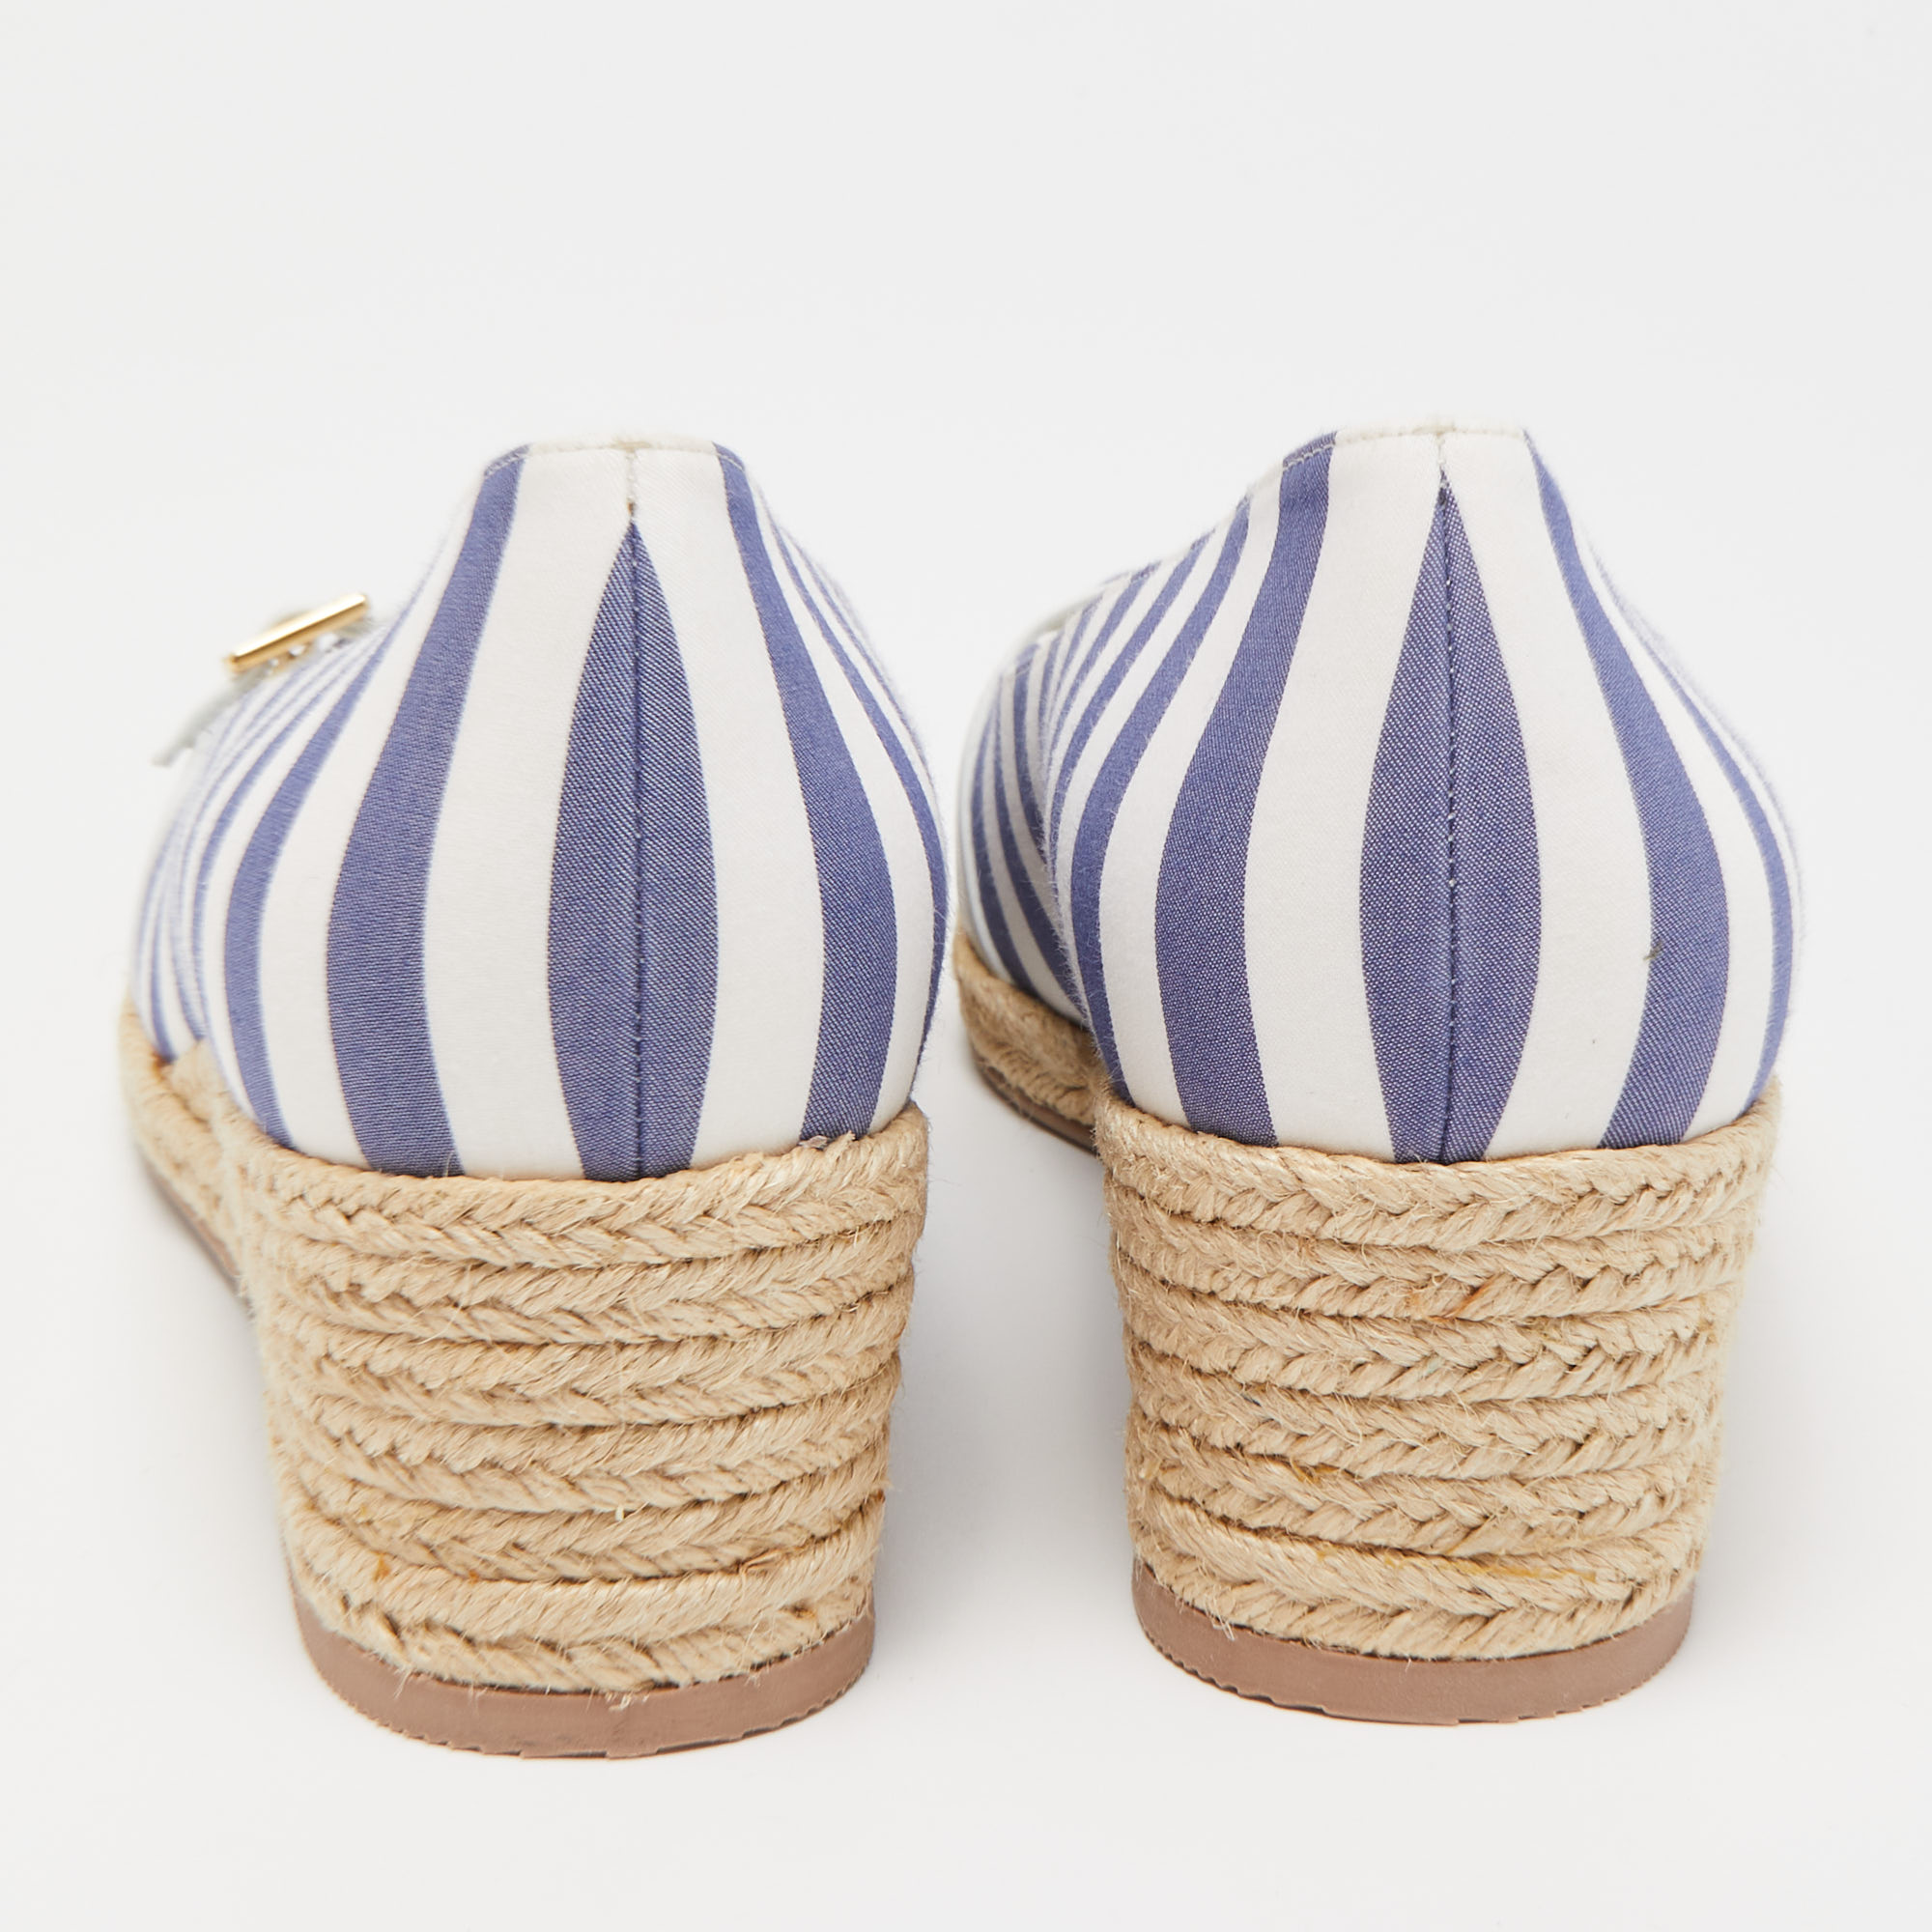 Salvatore Ferragamo Blue/White Striped Fabric Audrey Espadrille Wedge Pumps Size 40